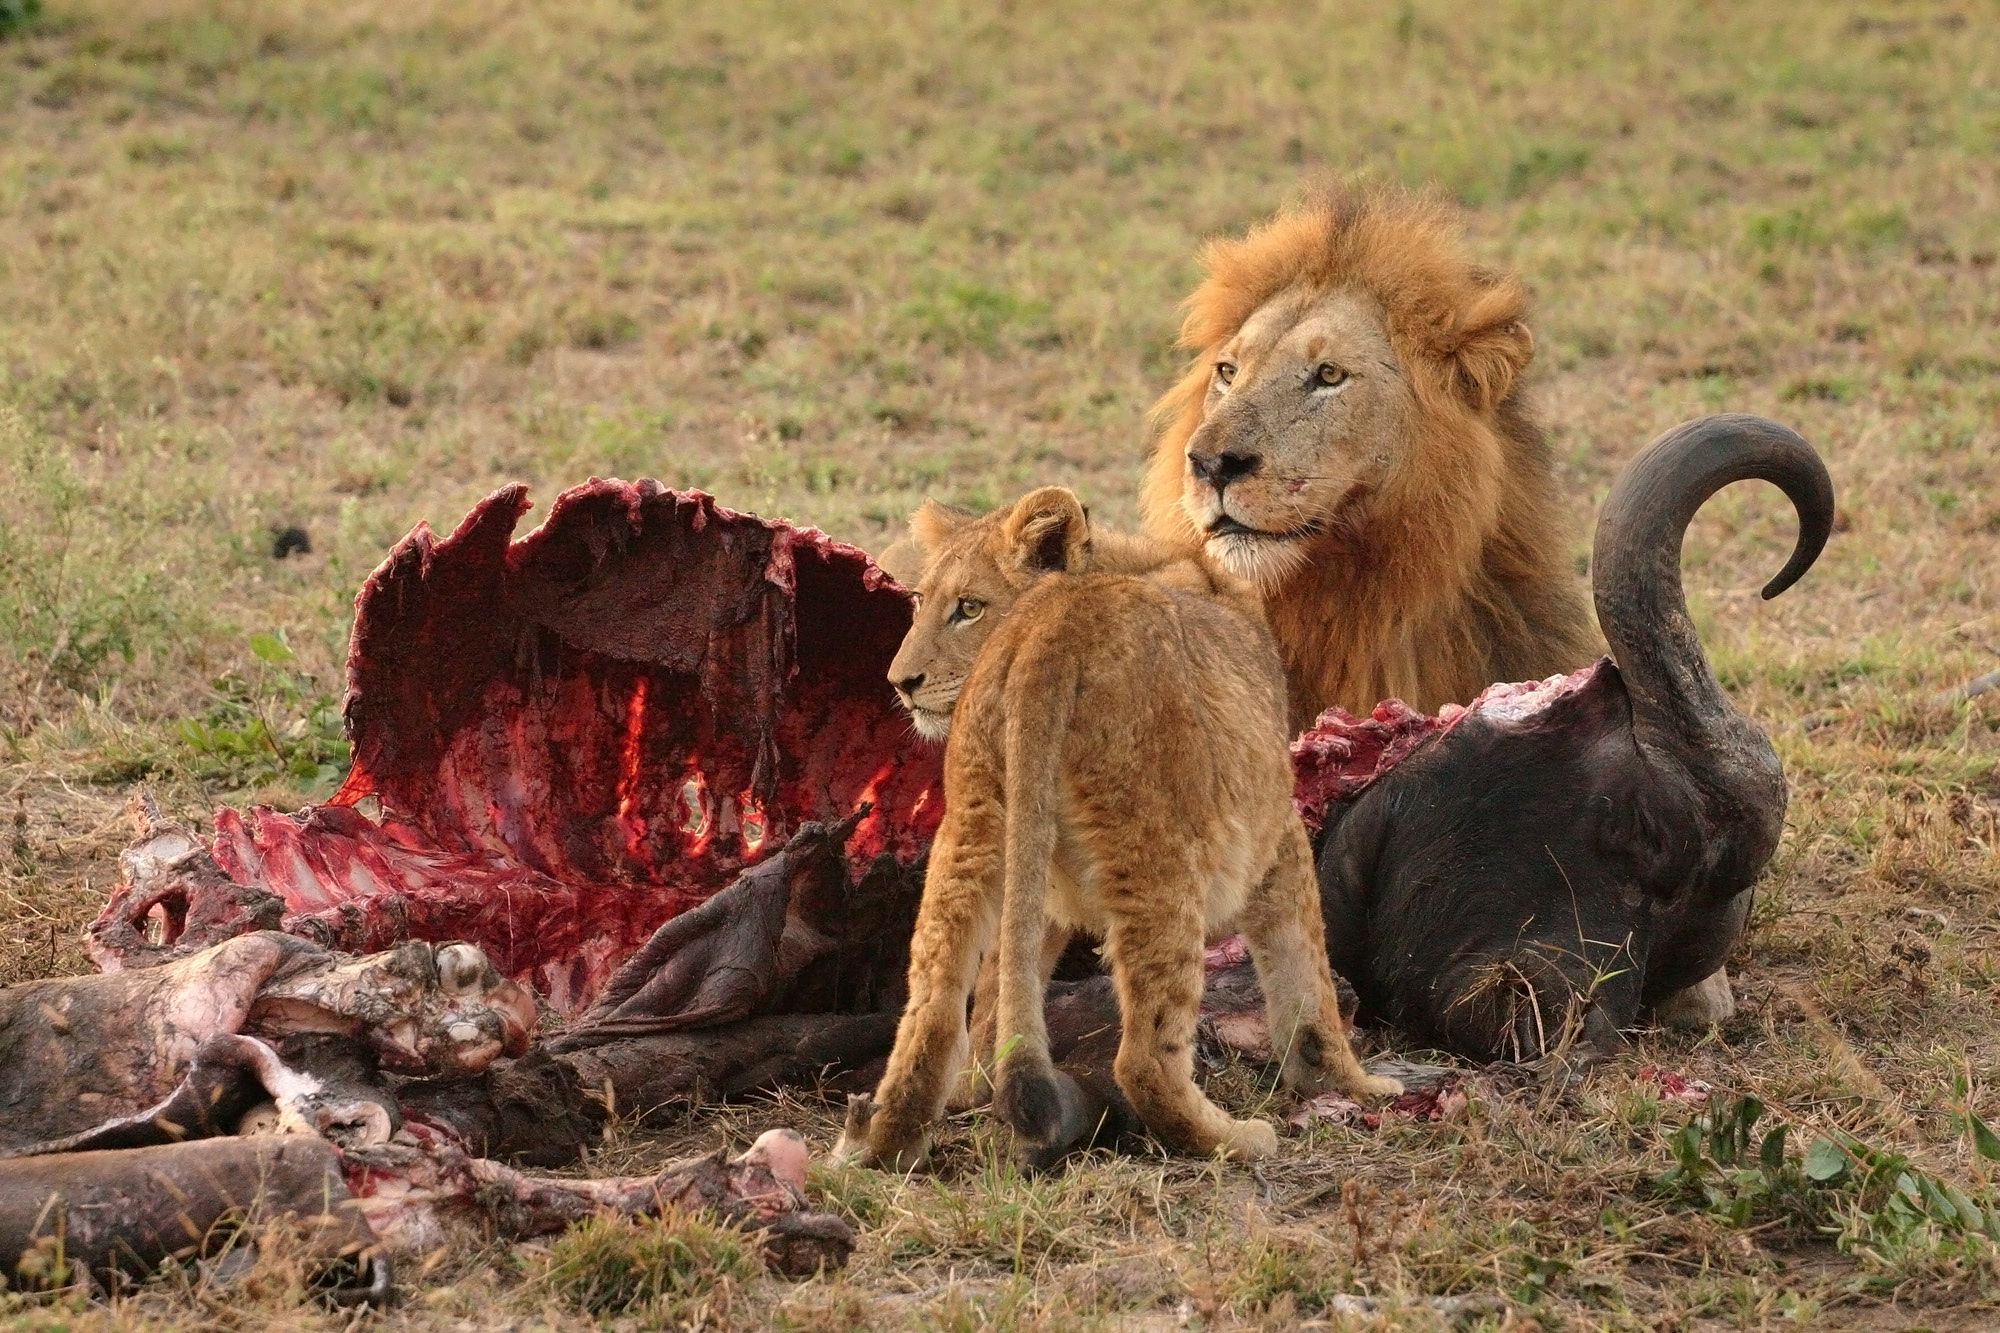 Male Lion and Cub Chitwa South Africa Luca Galuzzi 2004 edit1